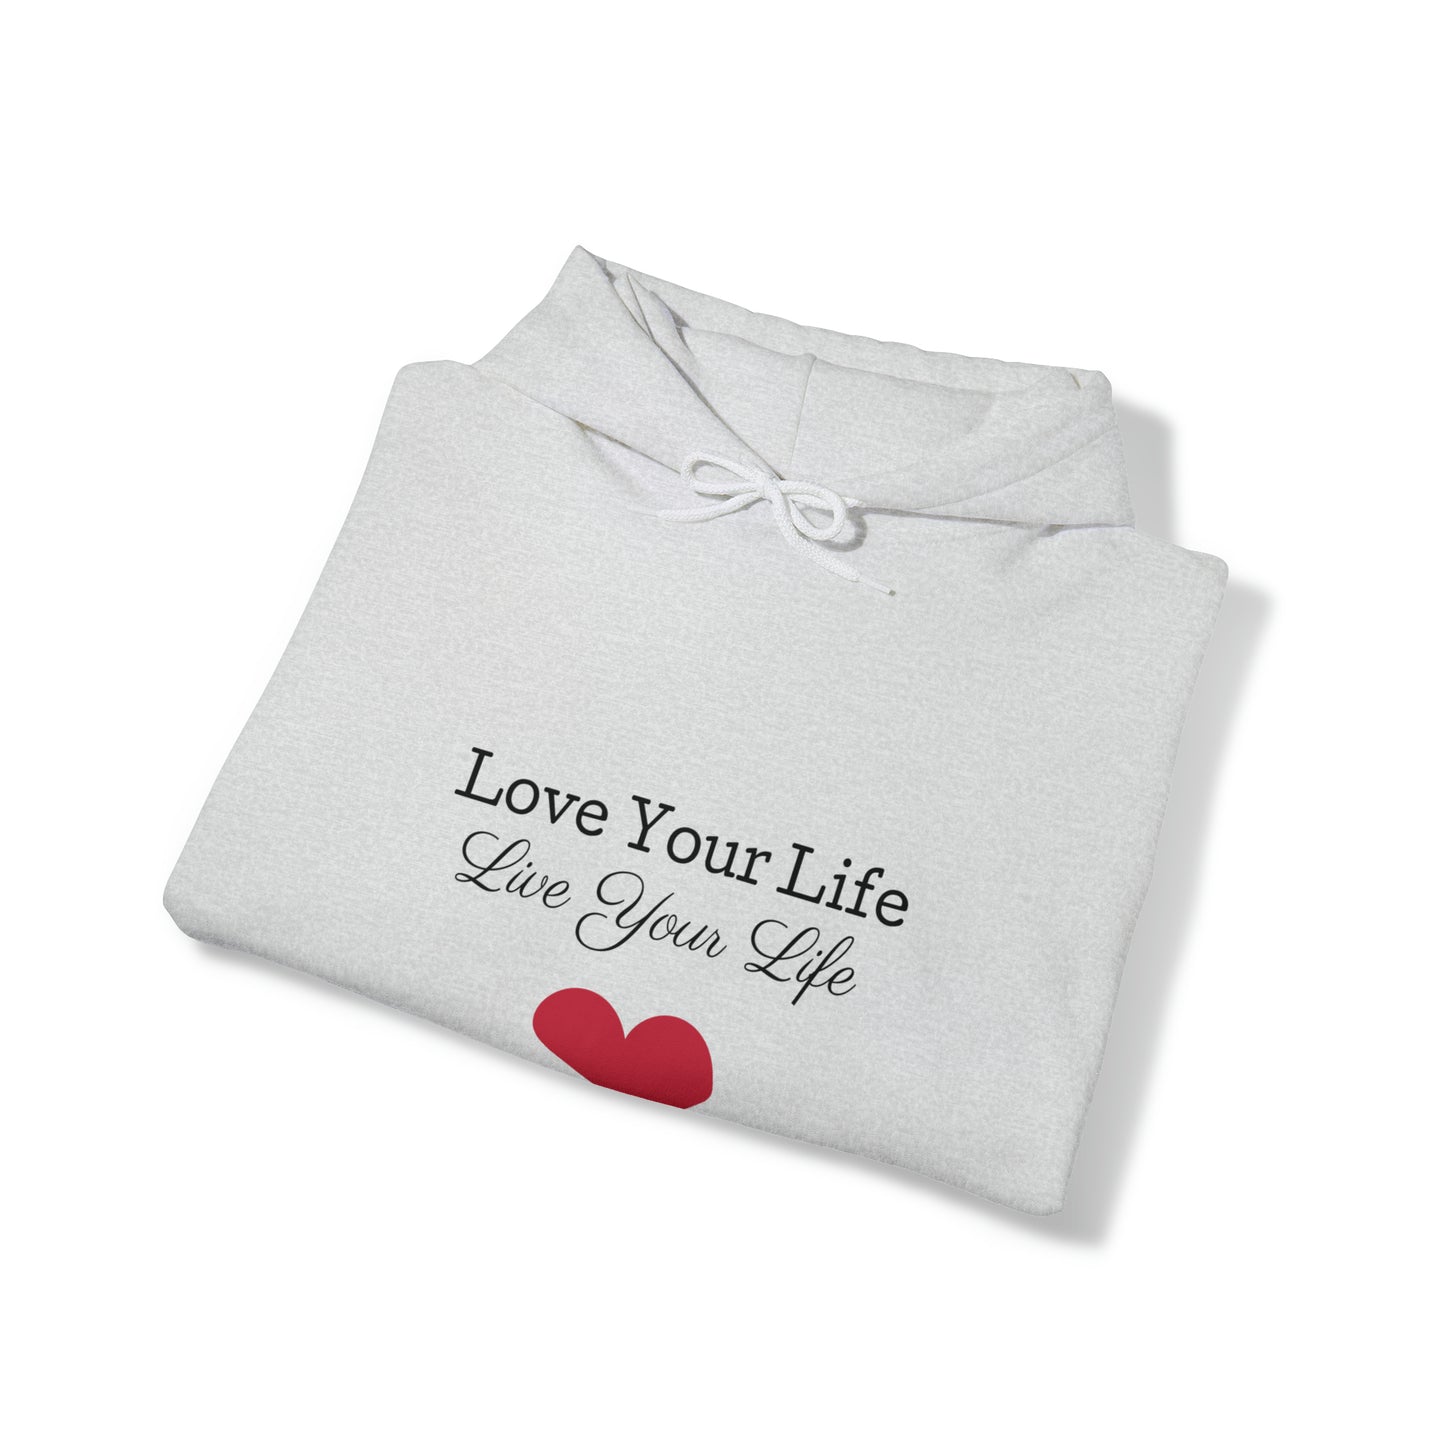 Unisex "Love Life" Hooded Sweatshirt